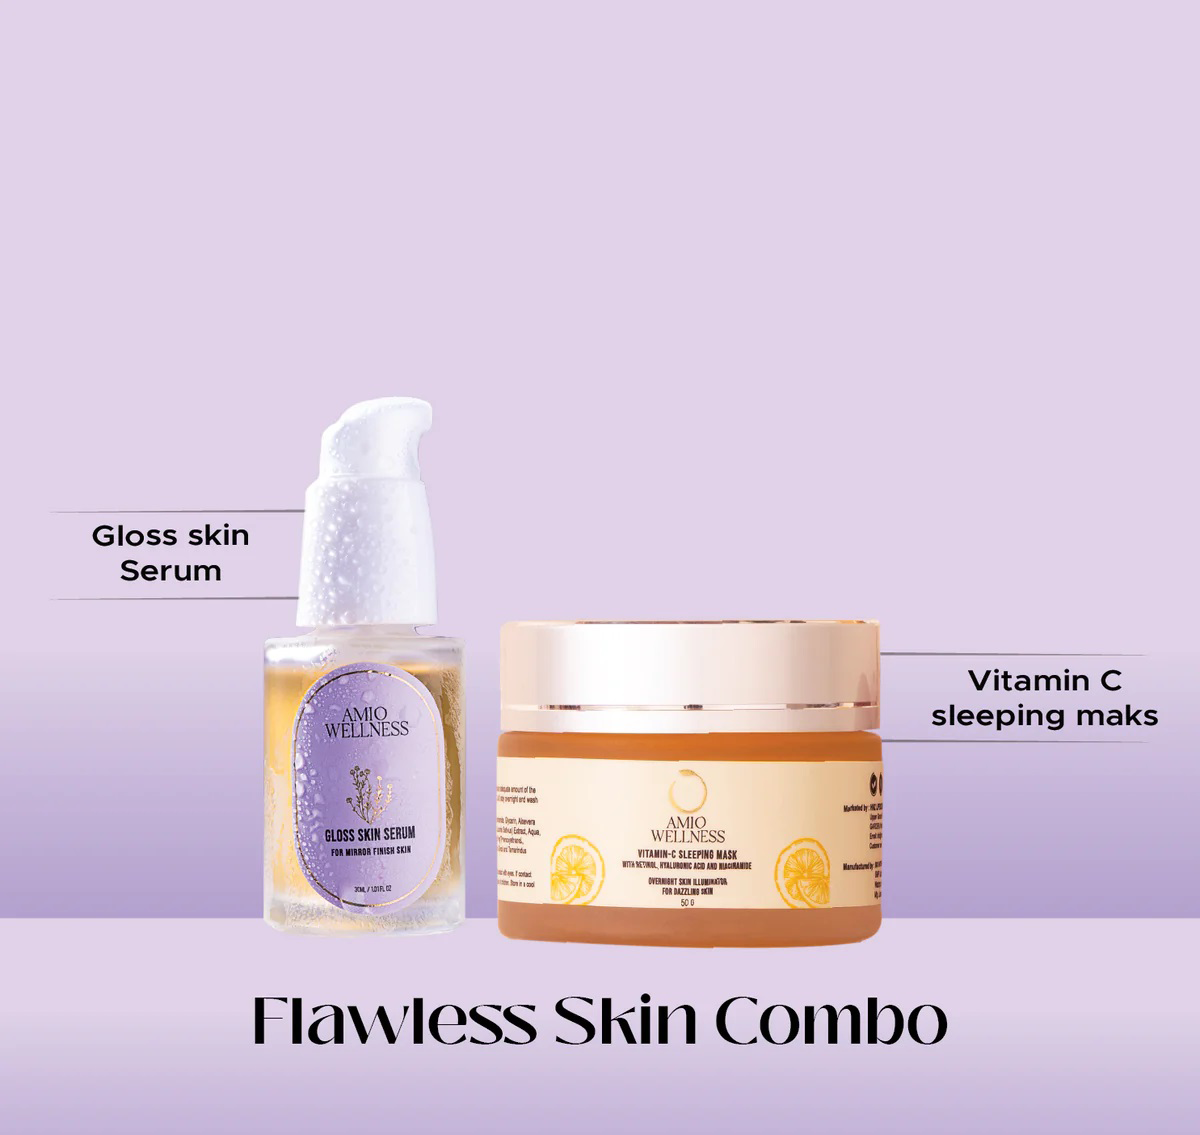 Flawless skin combo | Gloss skin serum for mirror finish skin 30ml | Vitamin C sleeping mask 50gm | Pack of 2